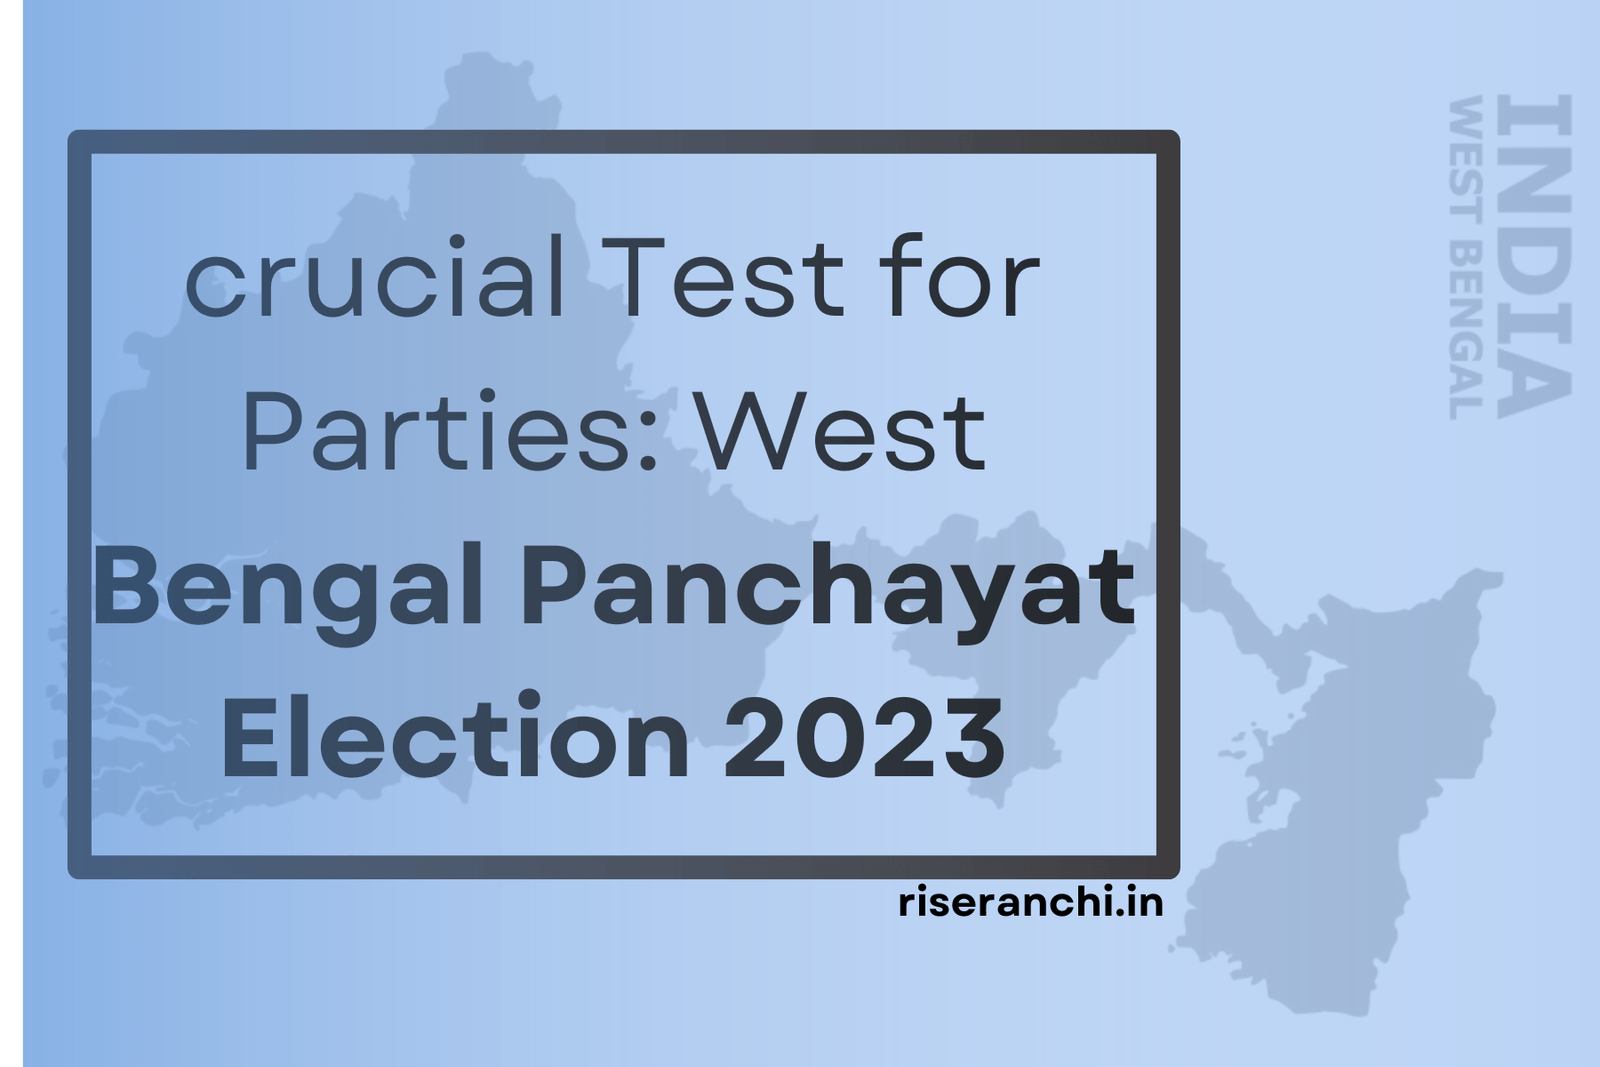 West Bengal Panchayat Election 2023: Shaping the Political Landscape